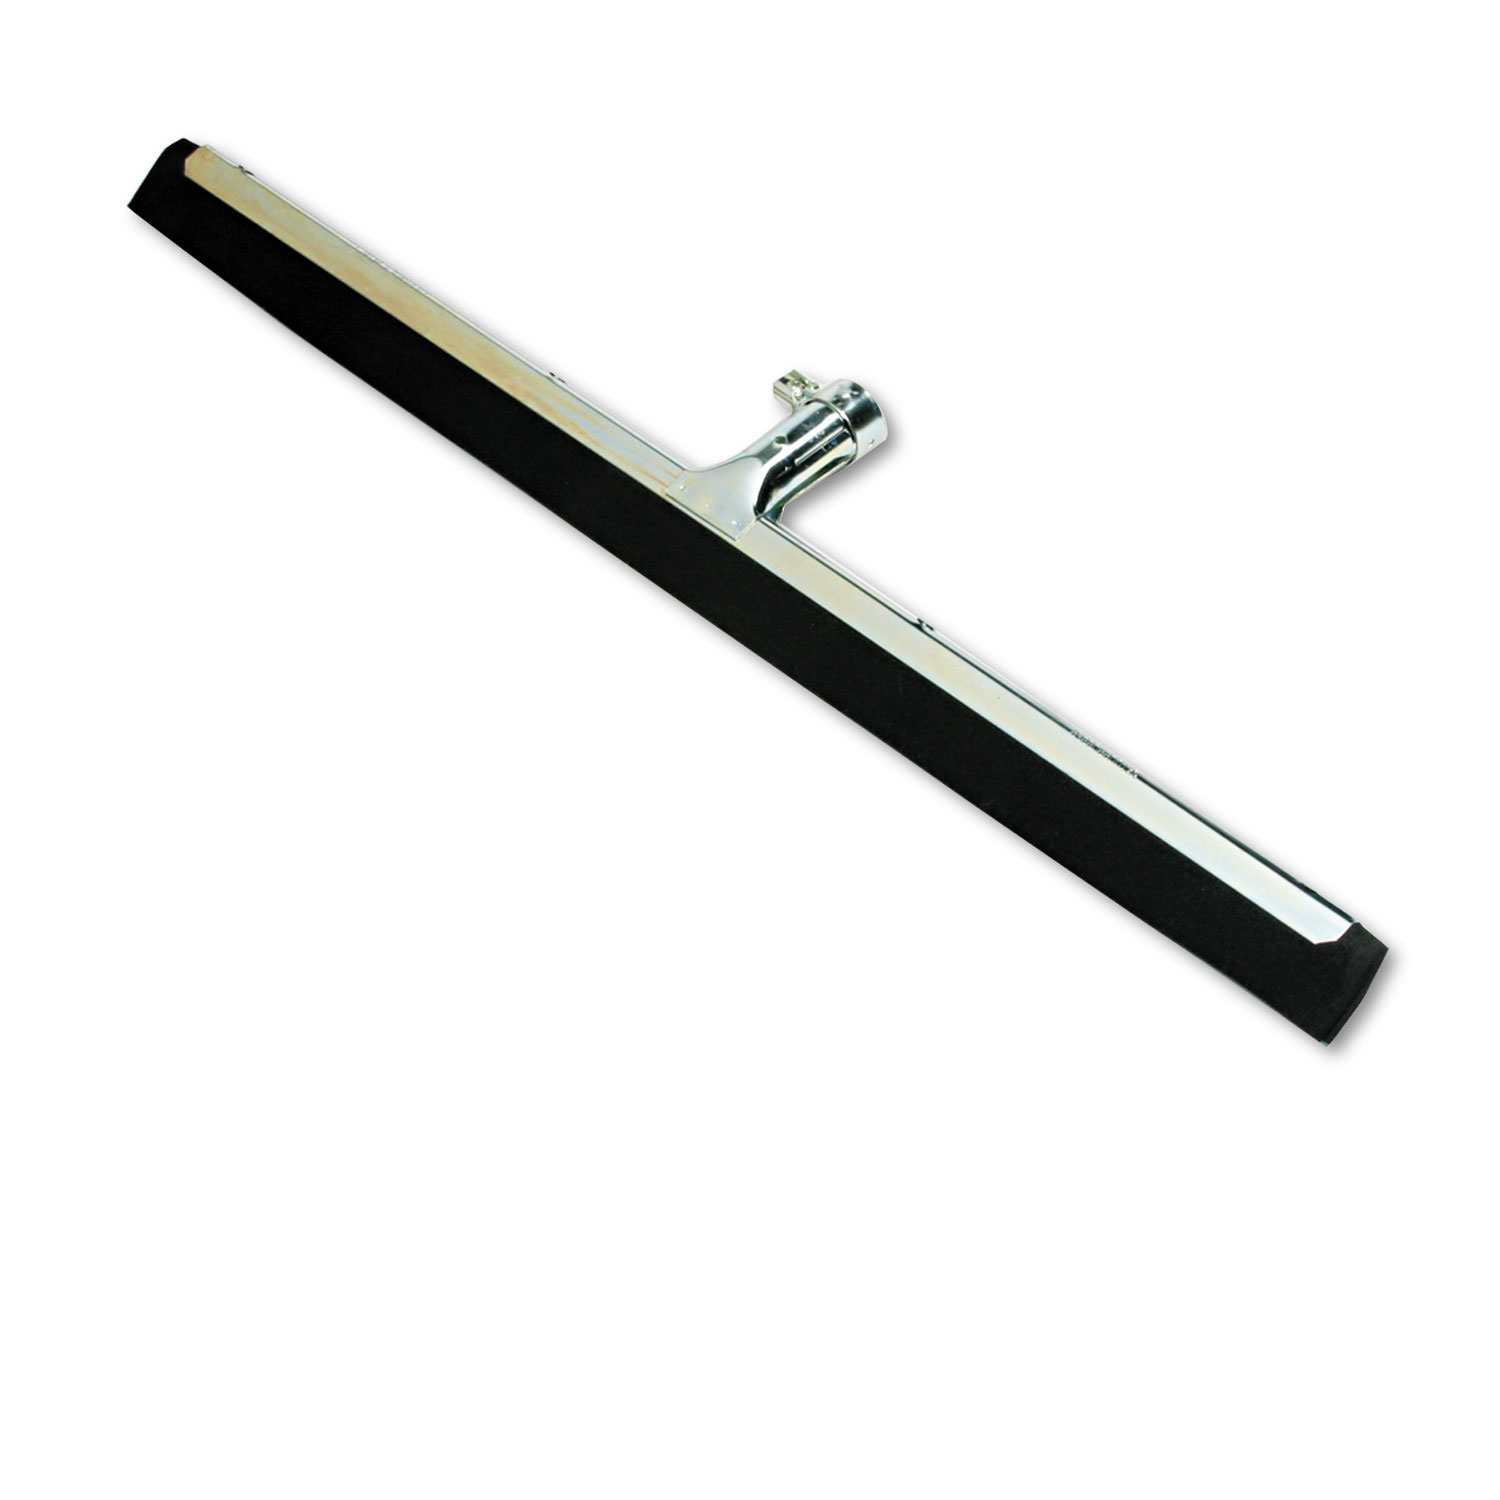  Unger MW550 Water Wand Standard Floor Squeegee, 22 Wide Blade, Black Rubber, Insert Socket (UNGMW550) 